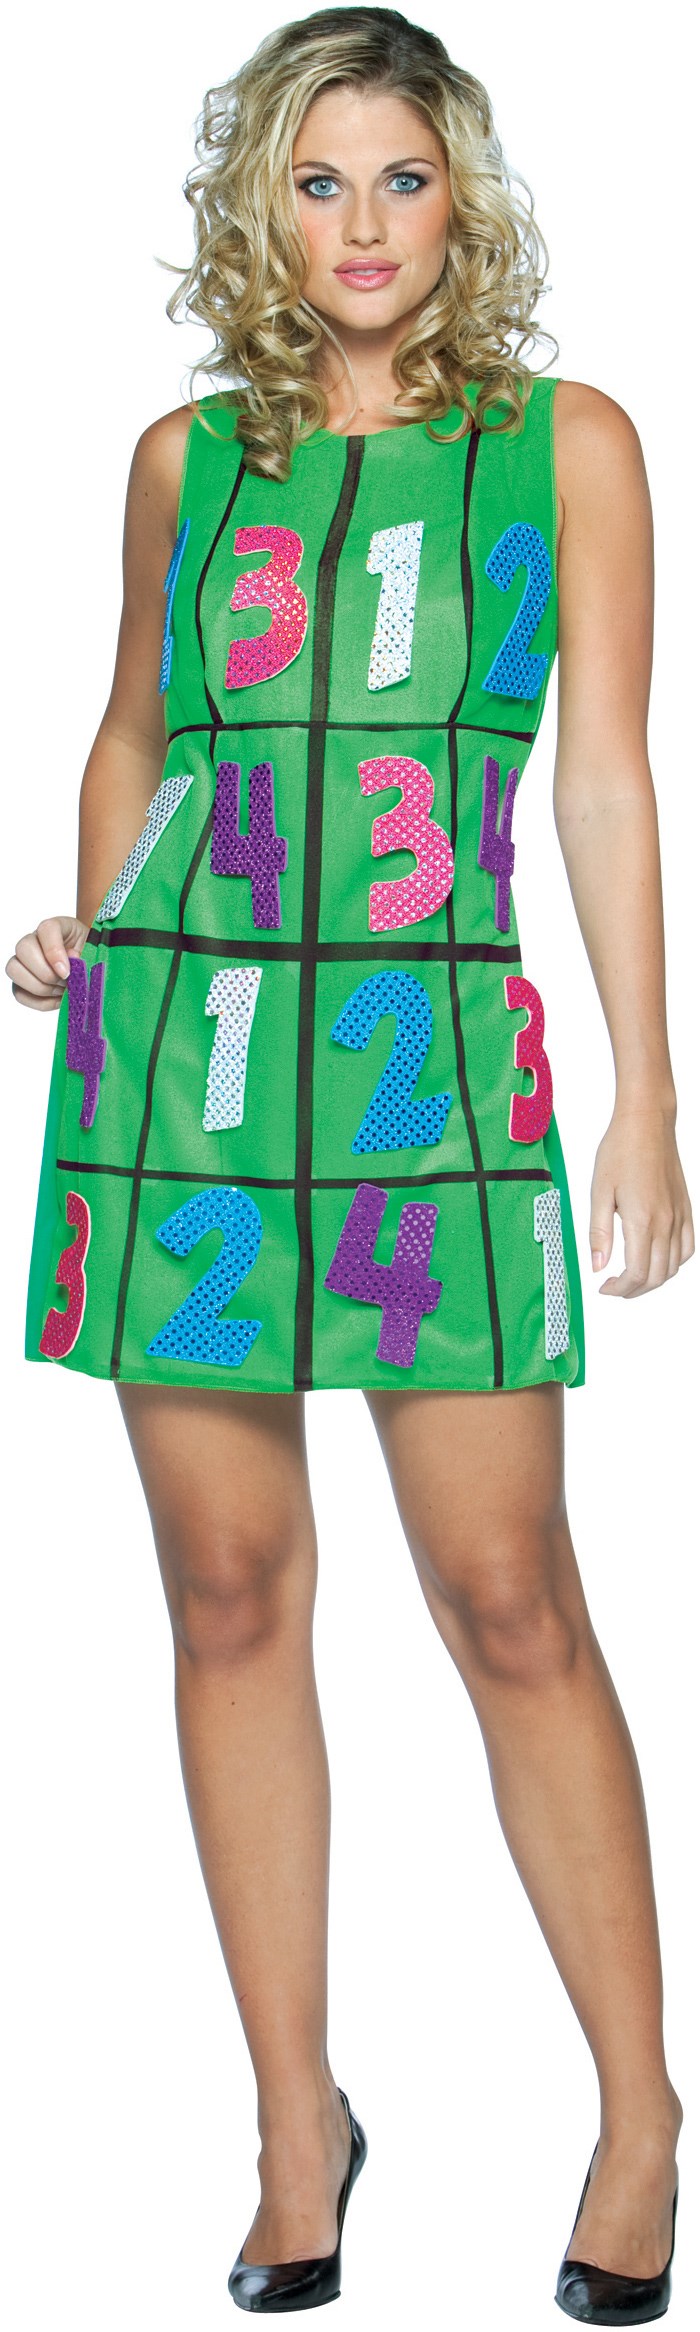 Sudoku Game Dress Adult Costume